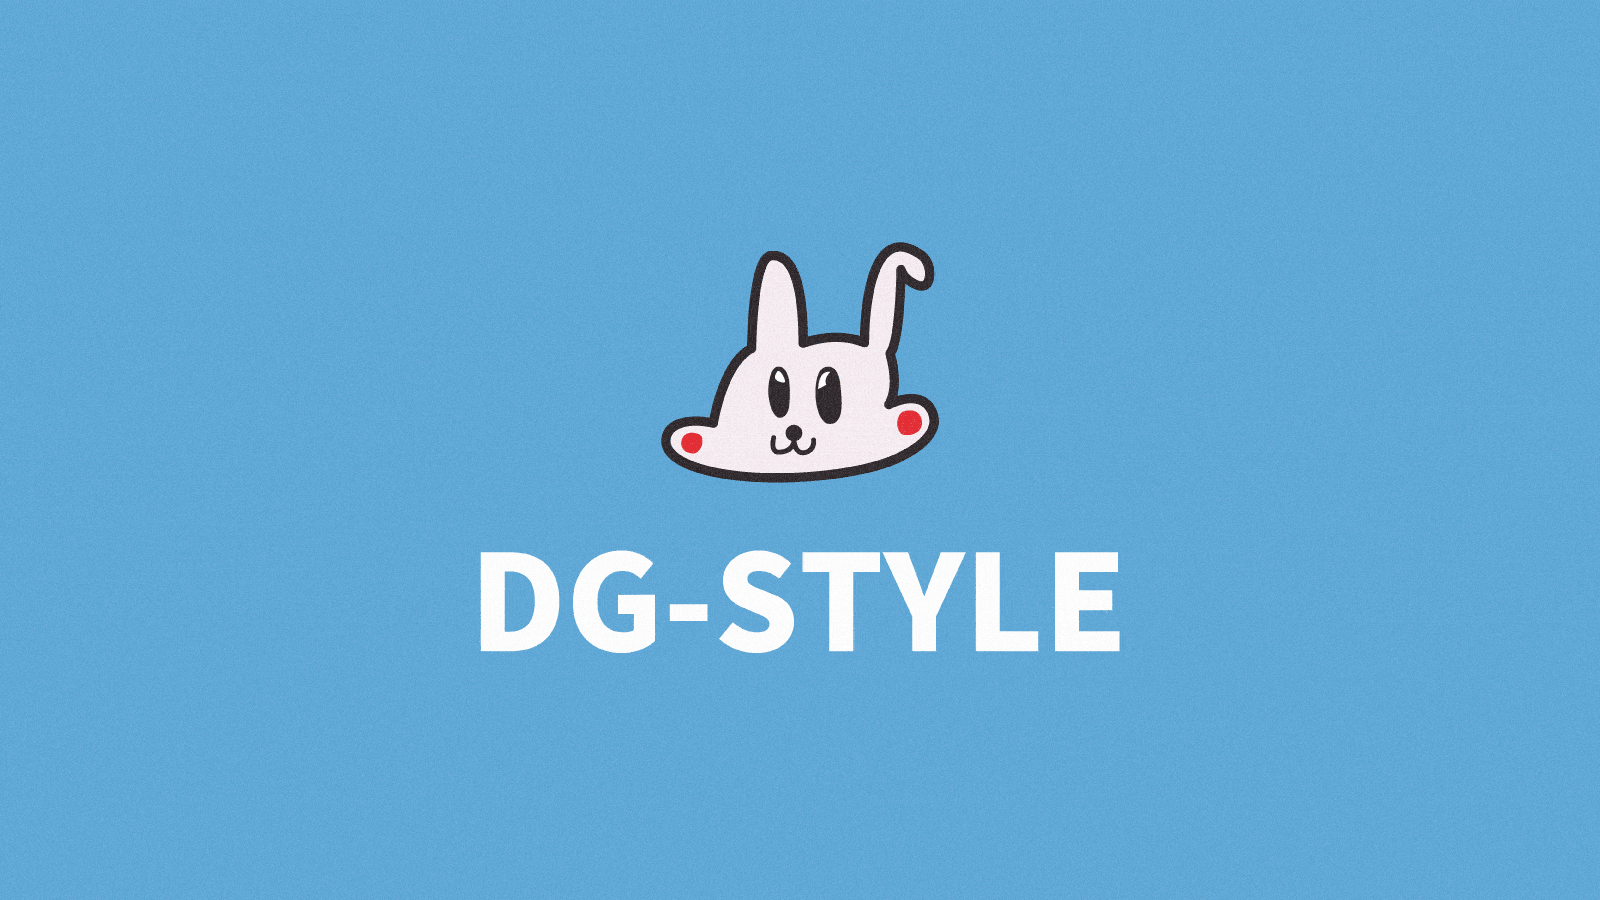 DG-STYLE Ver 5.1.1 アップデート